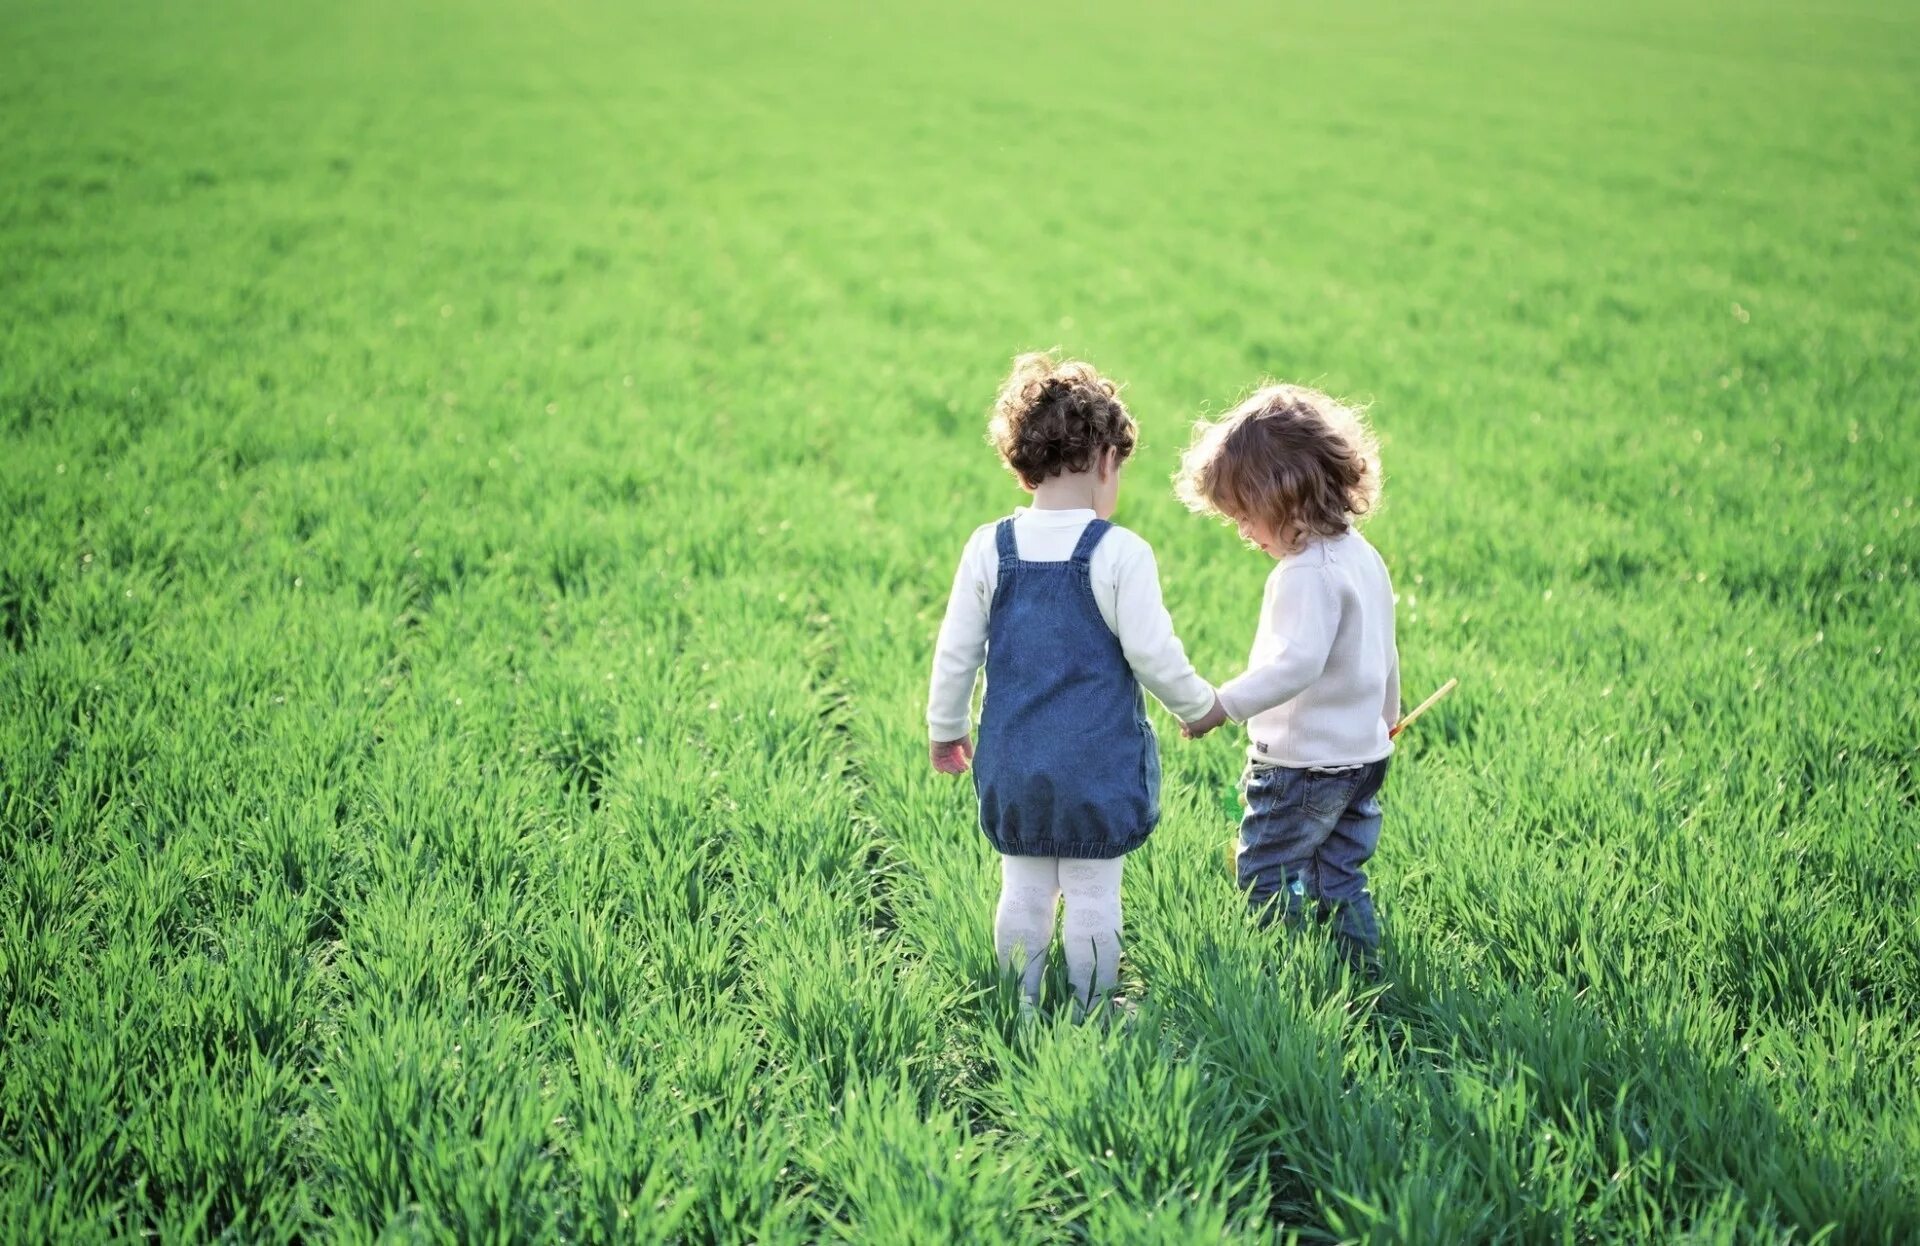 Child nature. Дети и природа. Мальчик и девочка в поле. Дети на газоне. Дети на Поляне.